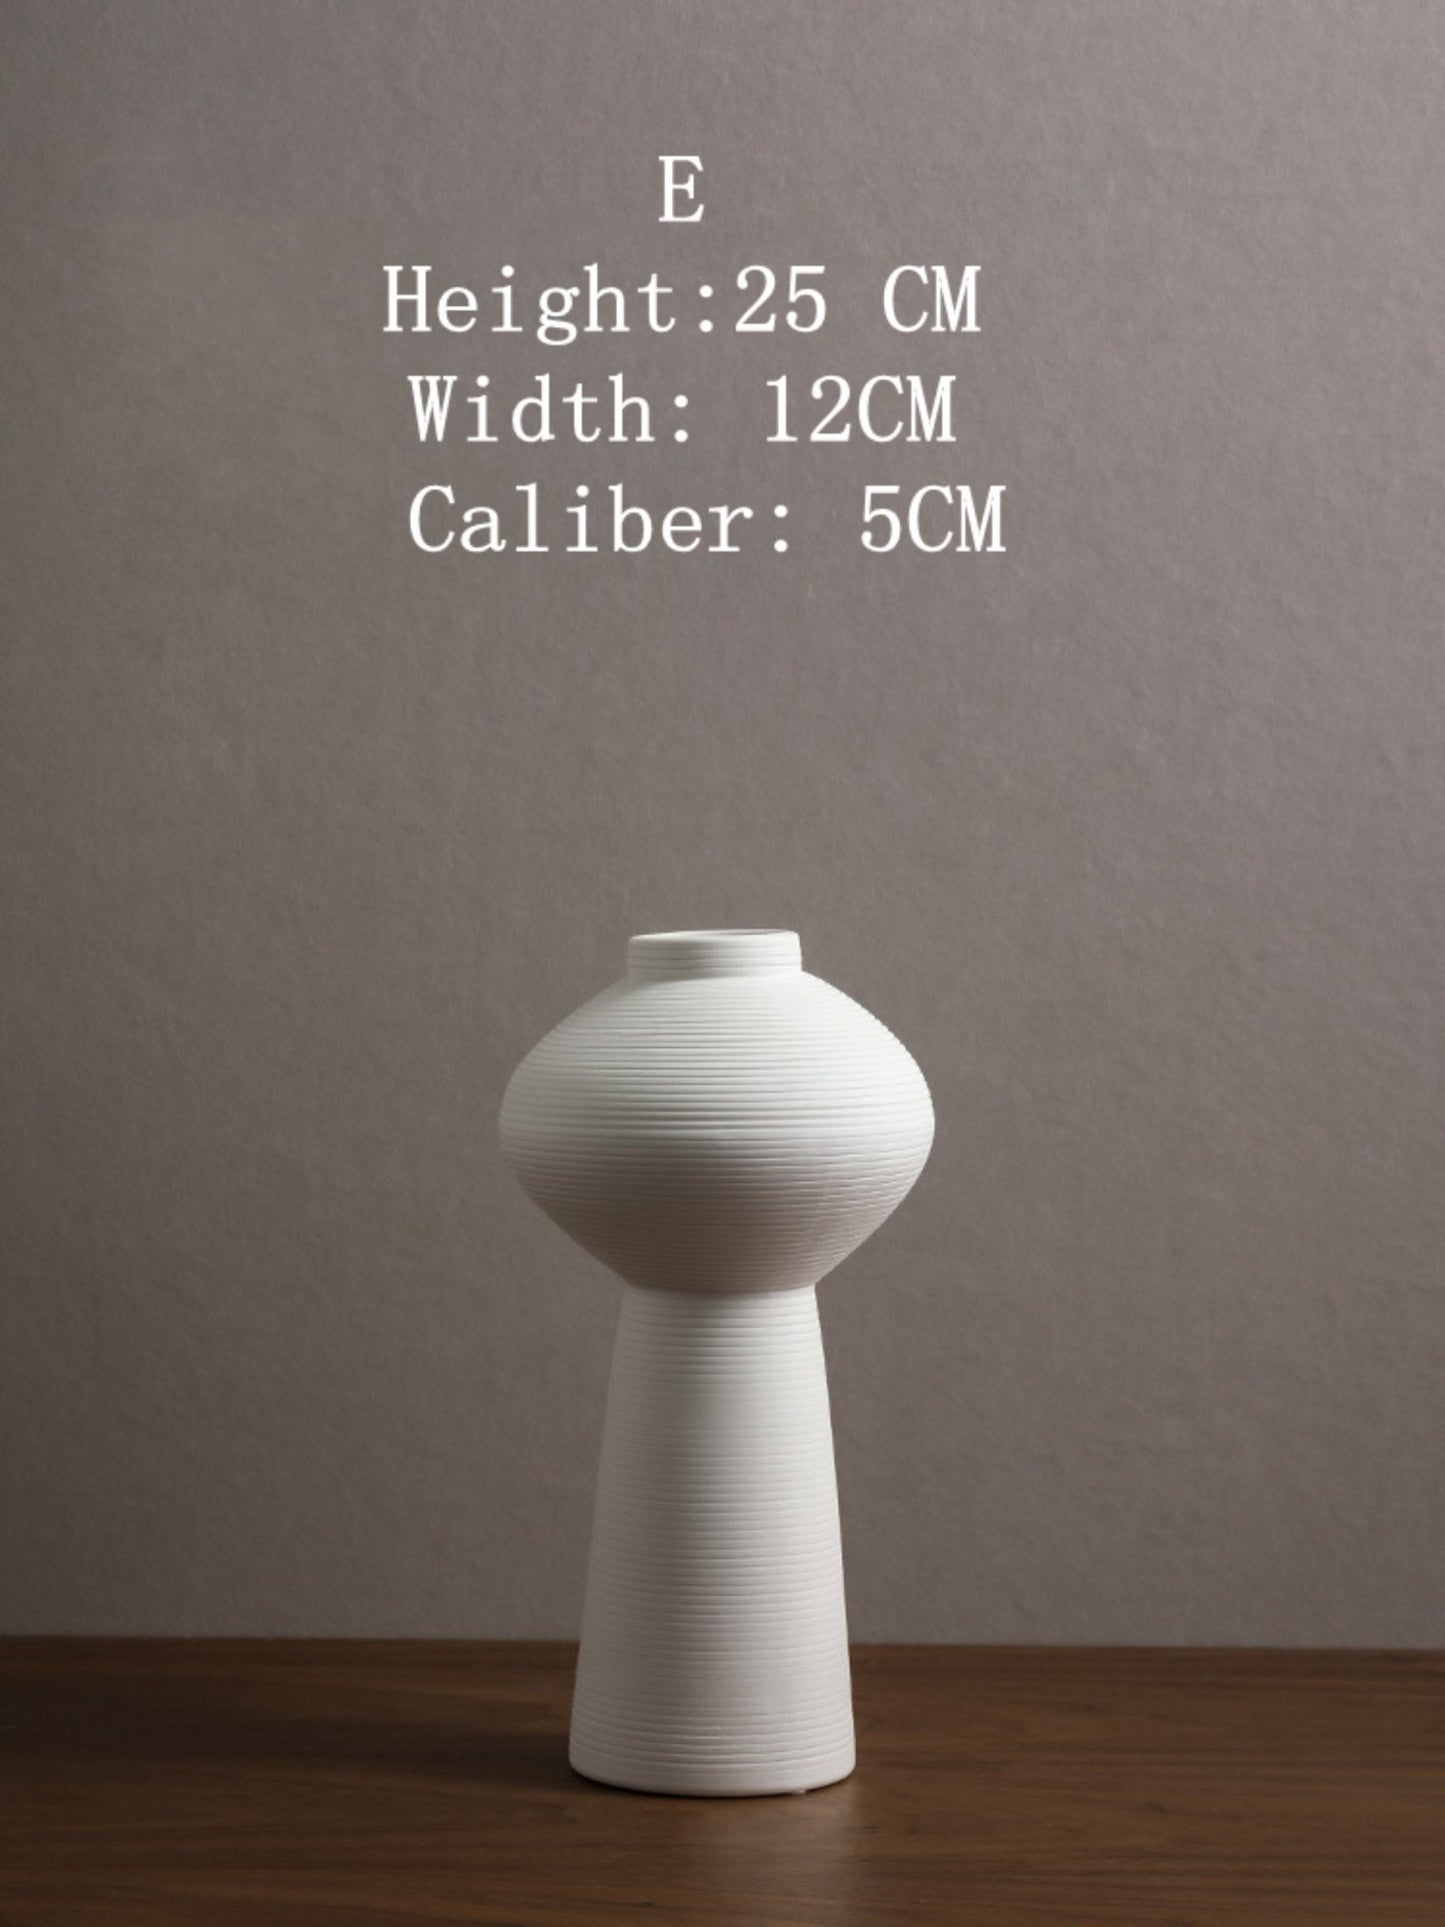 Japanese Ceramic Vases | White Ceramic Vase, Minimalist Vase Ceramic, Small White Ceramic Vase, Ceramic Vase Set, Table Vases - -